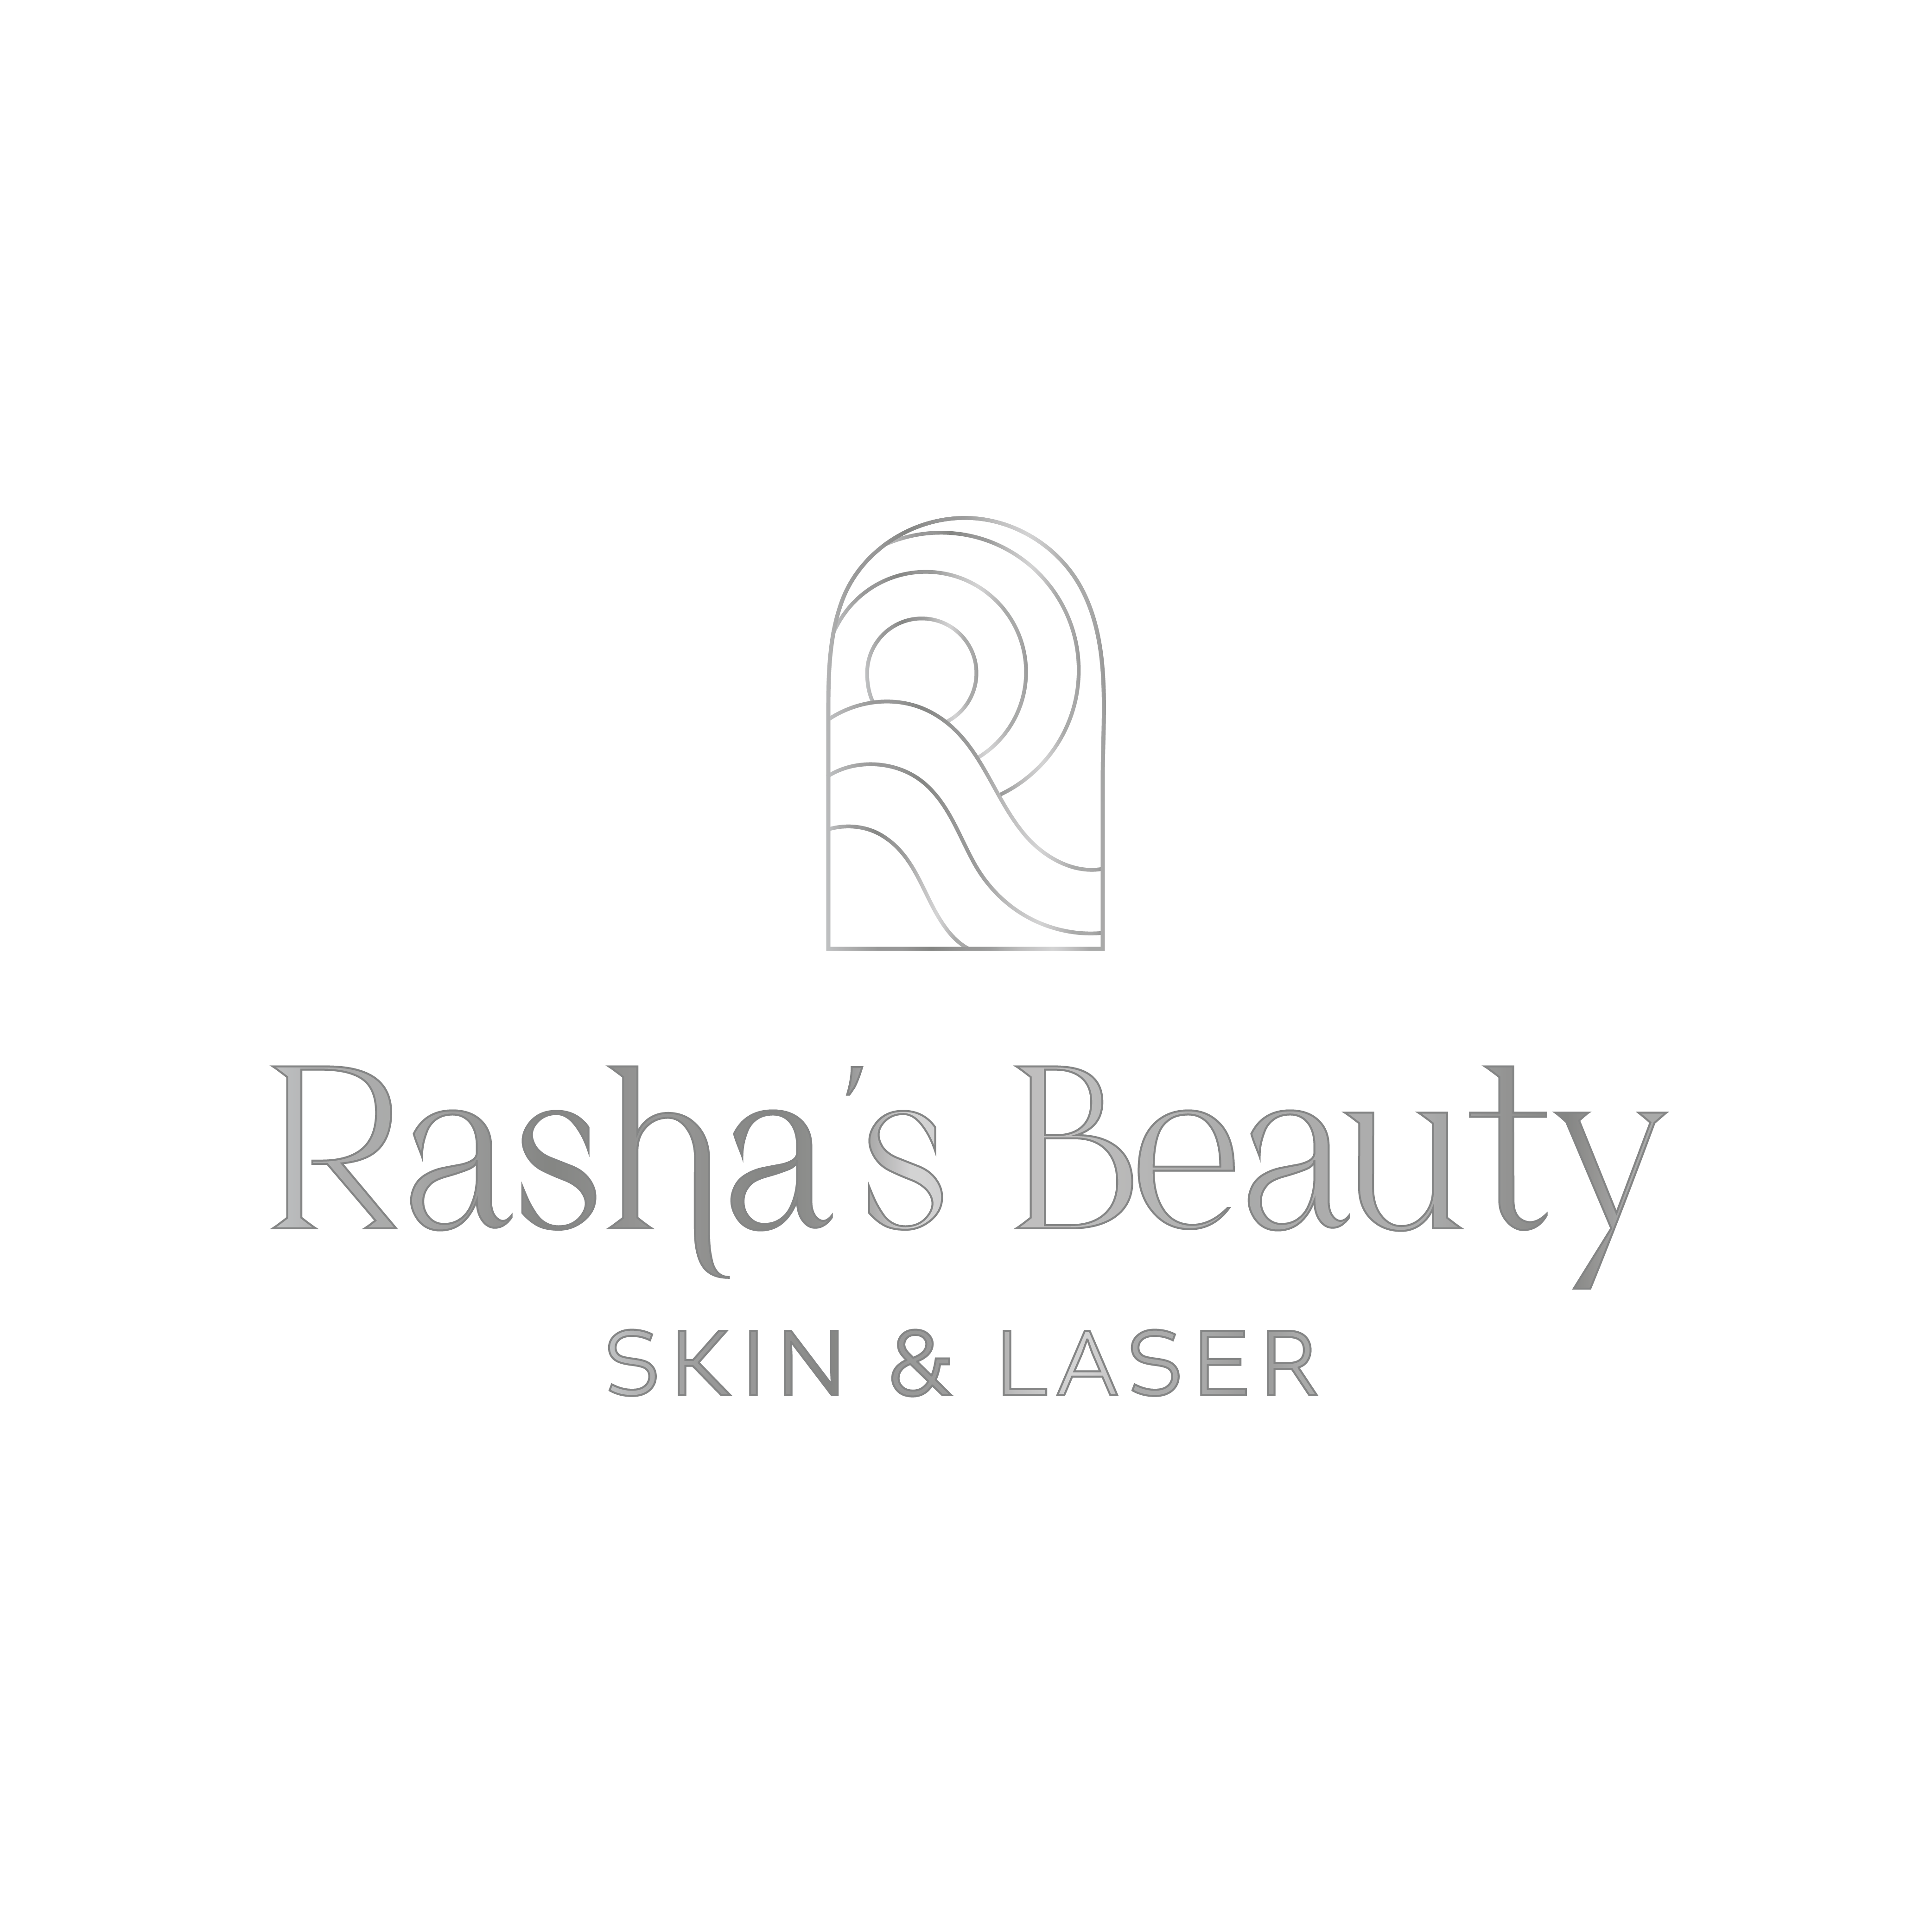 Rasha's Beauty Skin & Laser - Salem, MA 01970 - (617)909-9100 | ShowMeLocal.com